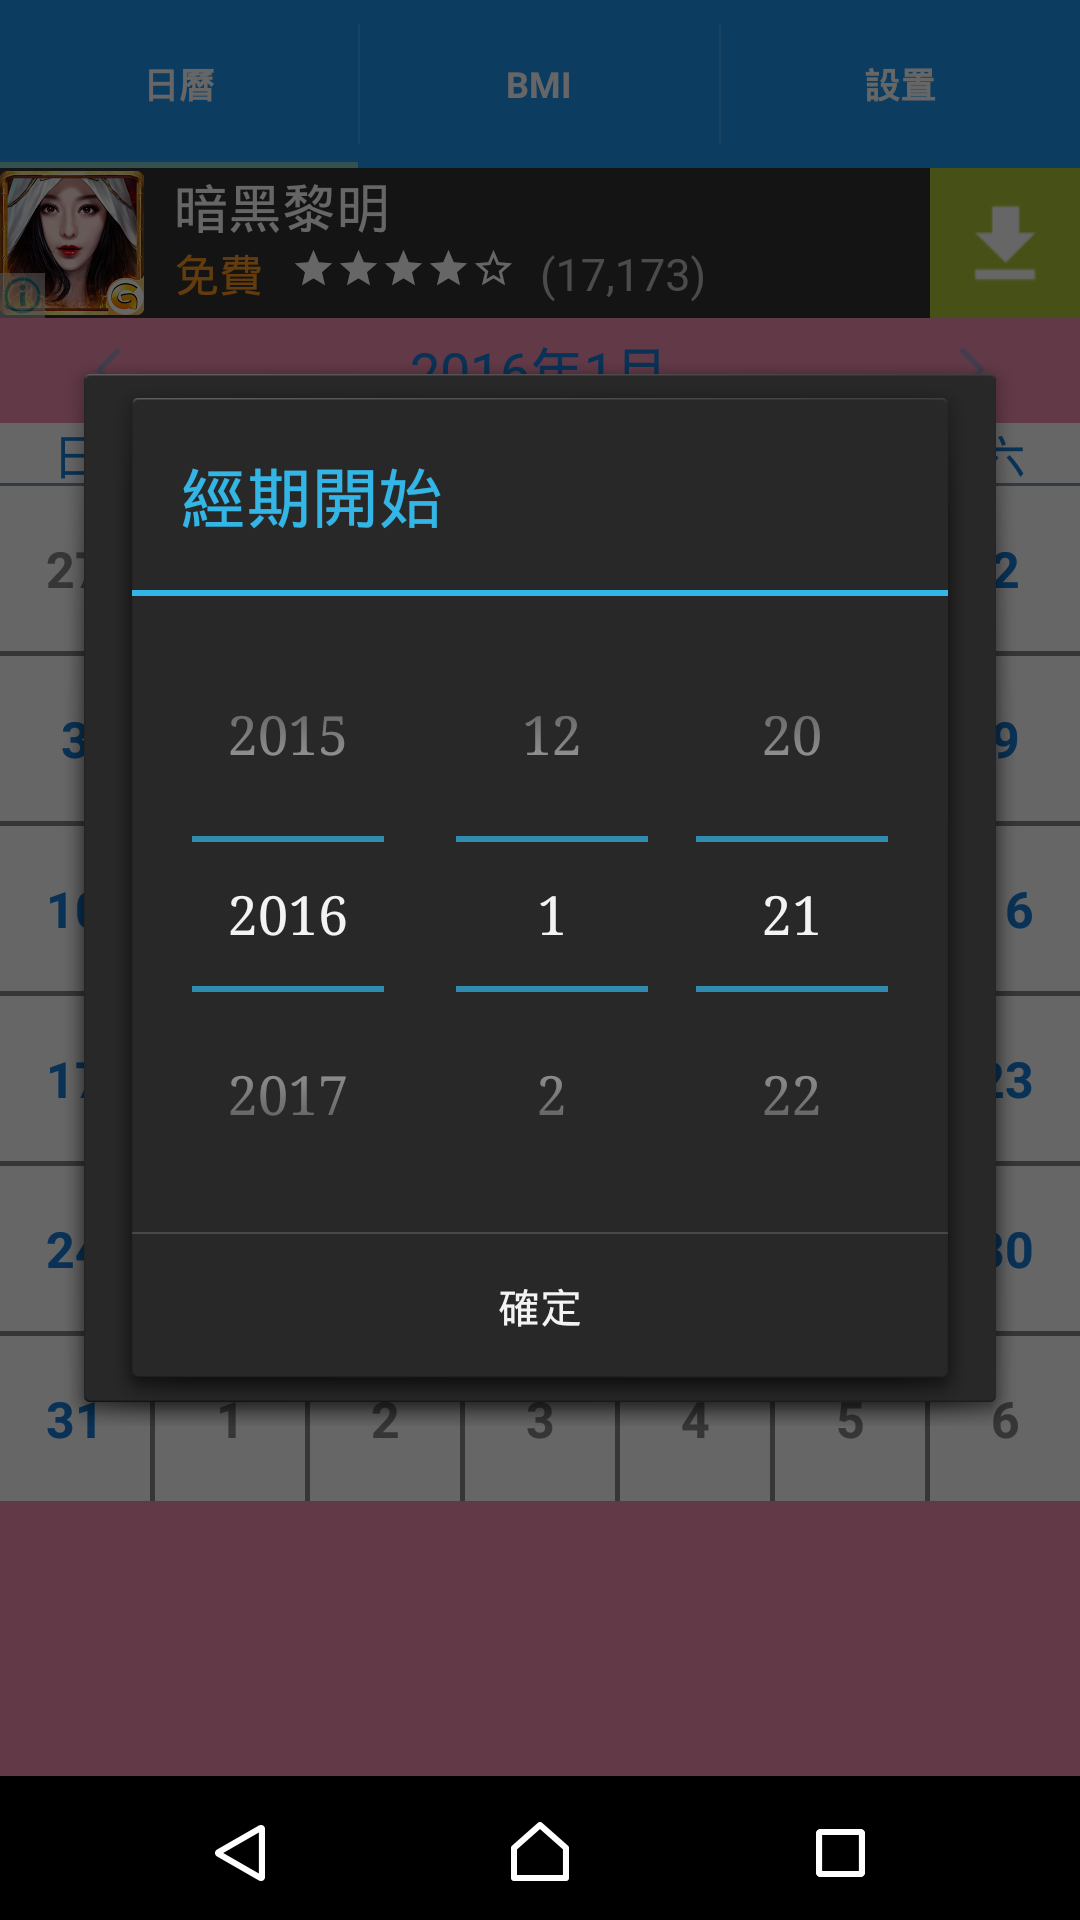 Android application Period Tracker,BMI Calculator screenshort